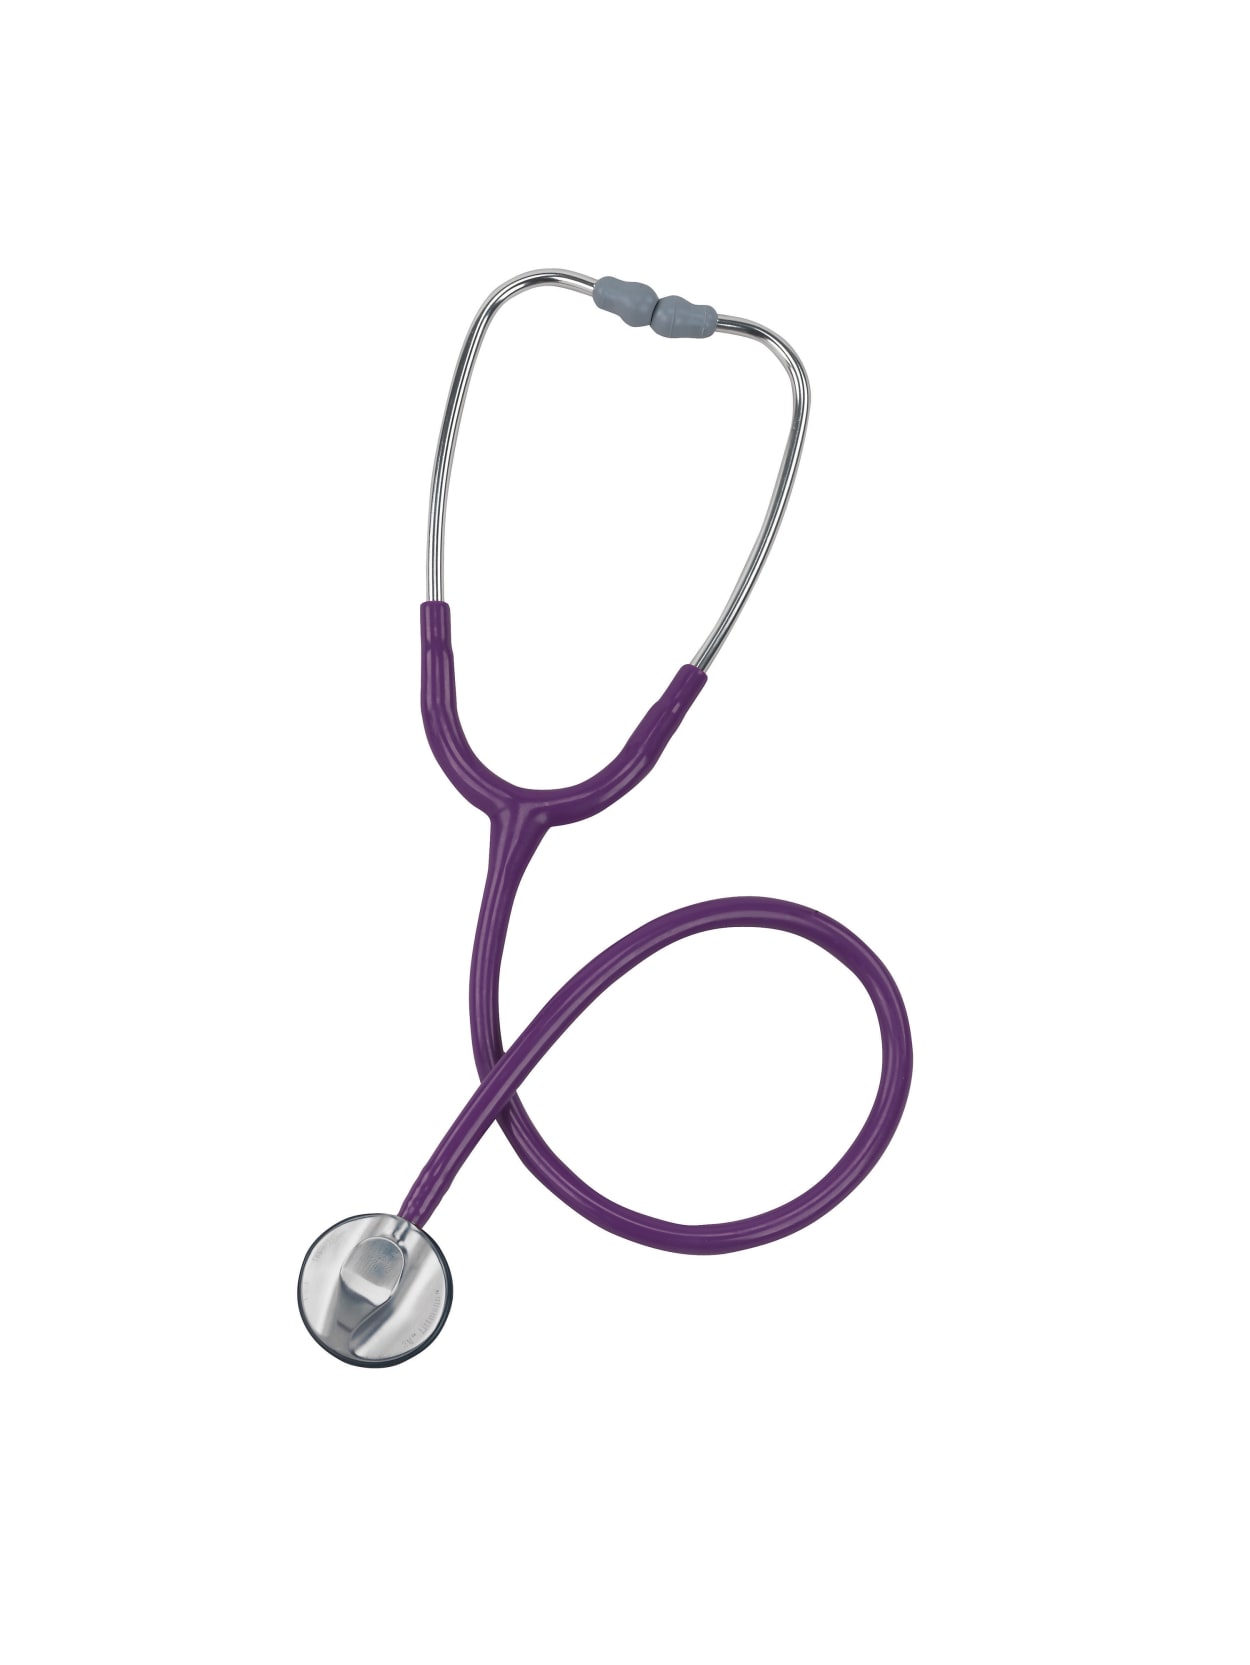 littman purple stethoscope